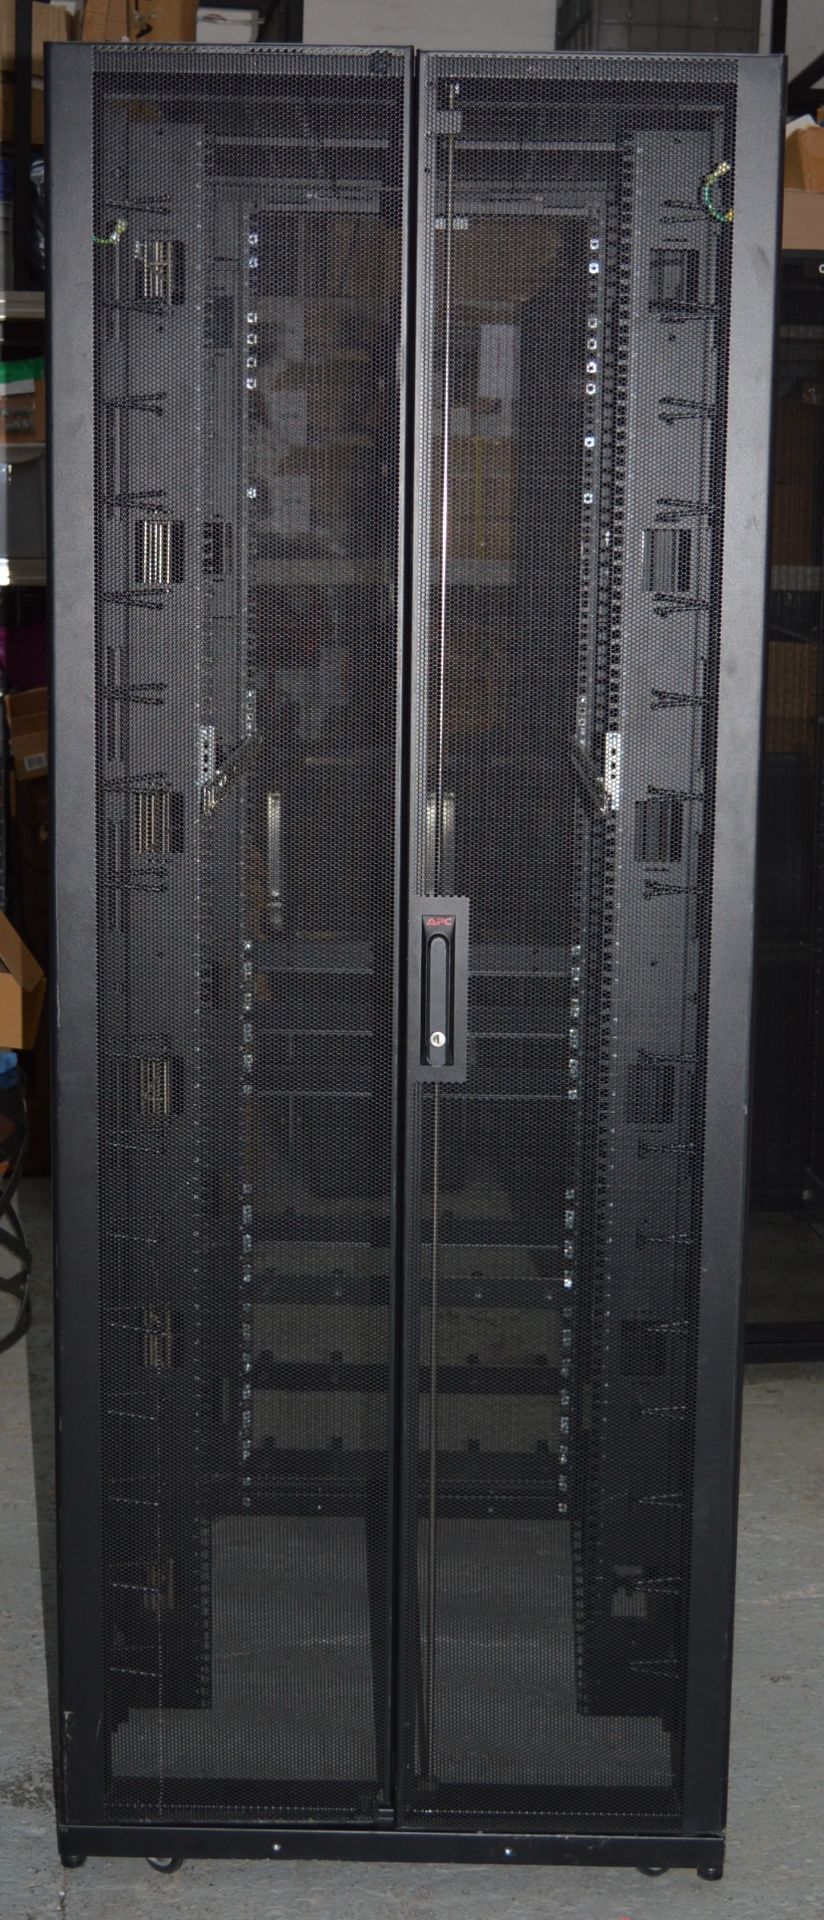 1 x APC Netshelter 42U Server Enclosure - AR3100 Black - Suitable For 19 Inch Compliant - Image 3 of 6